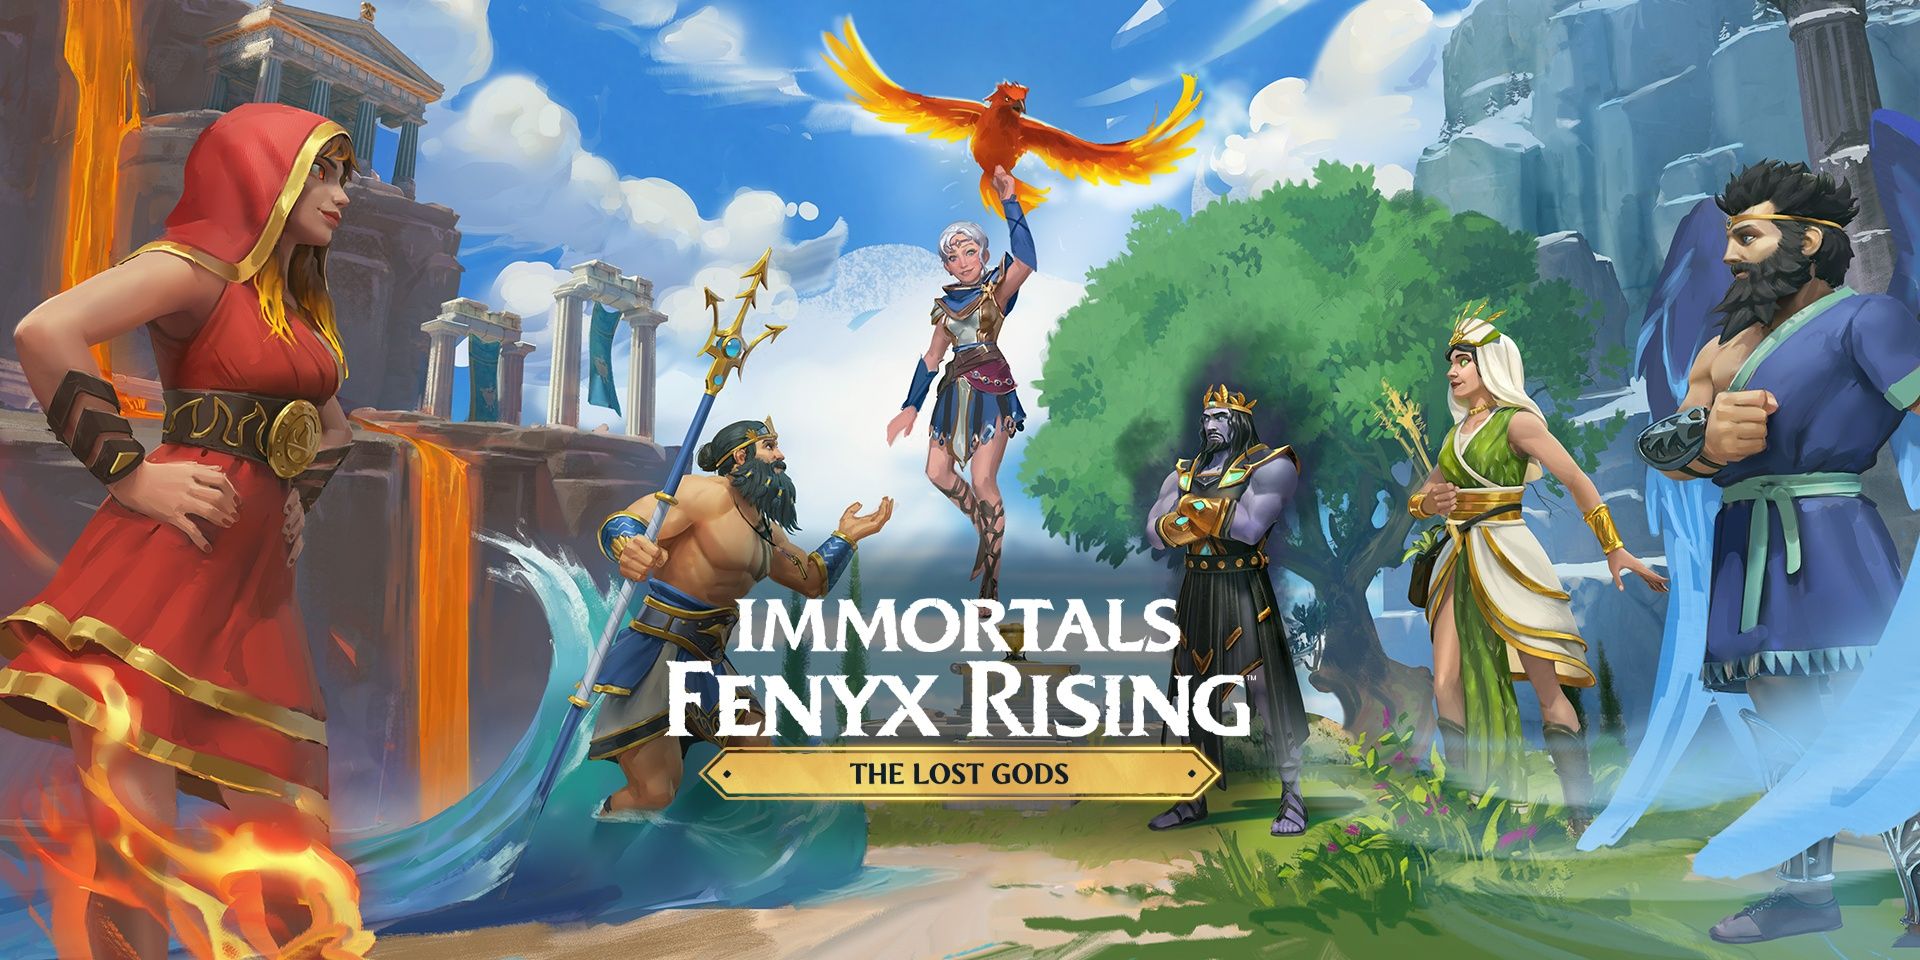 Comparing Immortals Fenyx Risings DLCs to Assassins Creed Odysseys